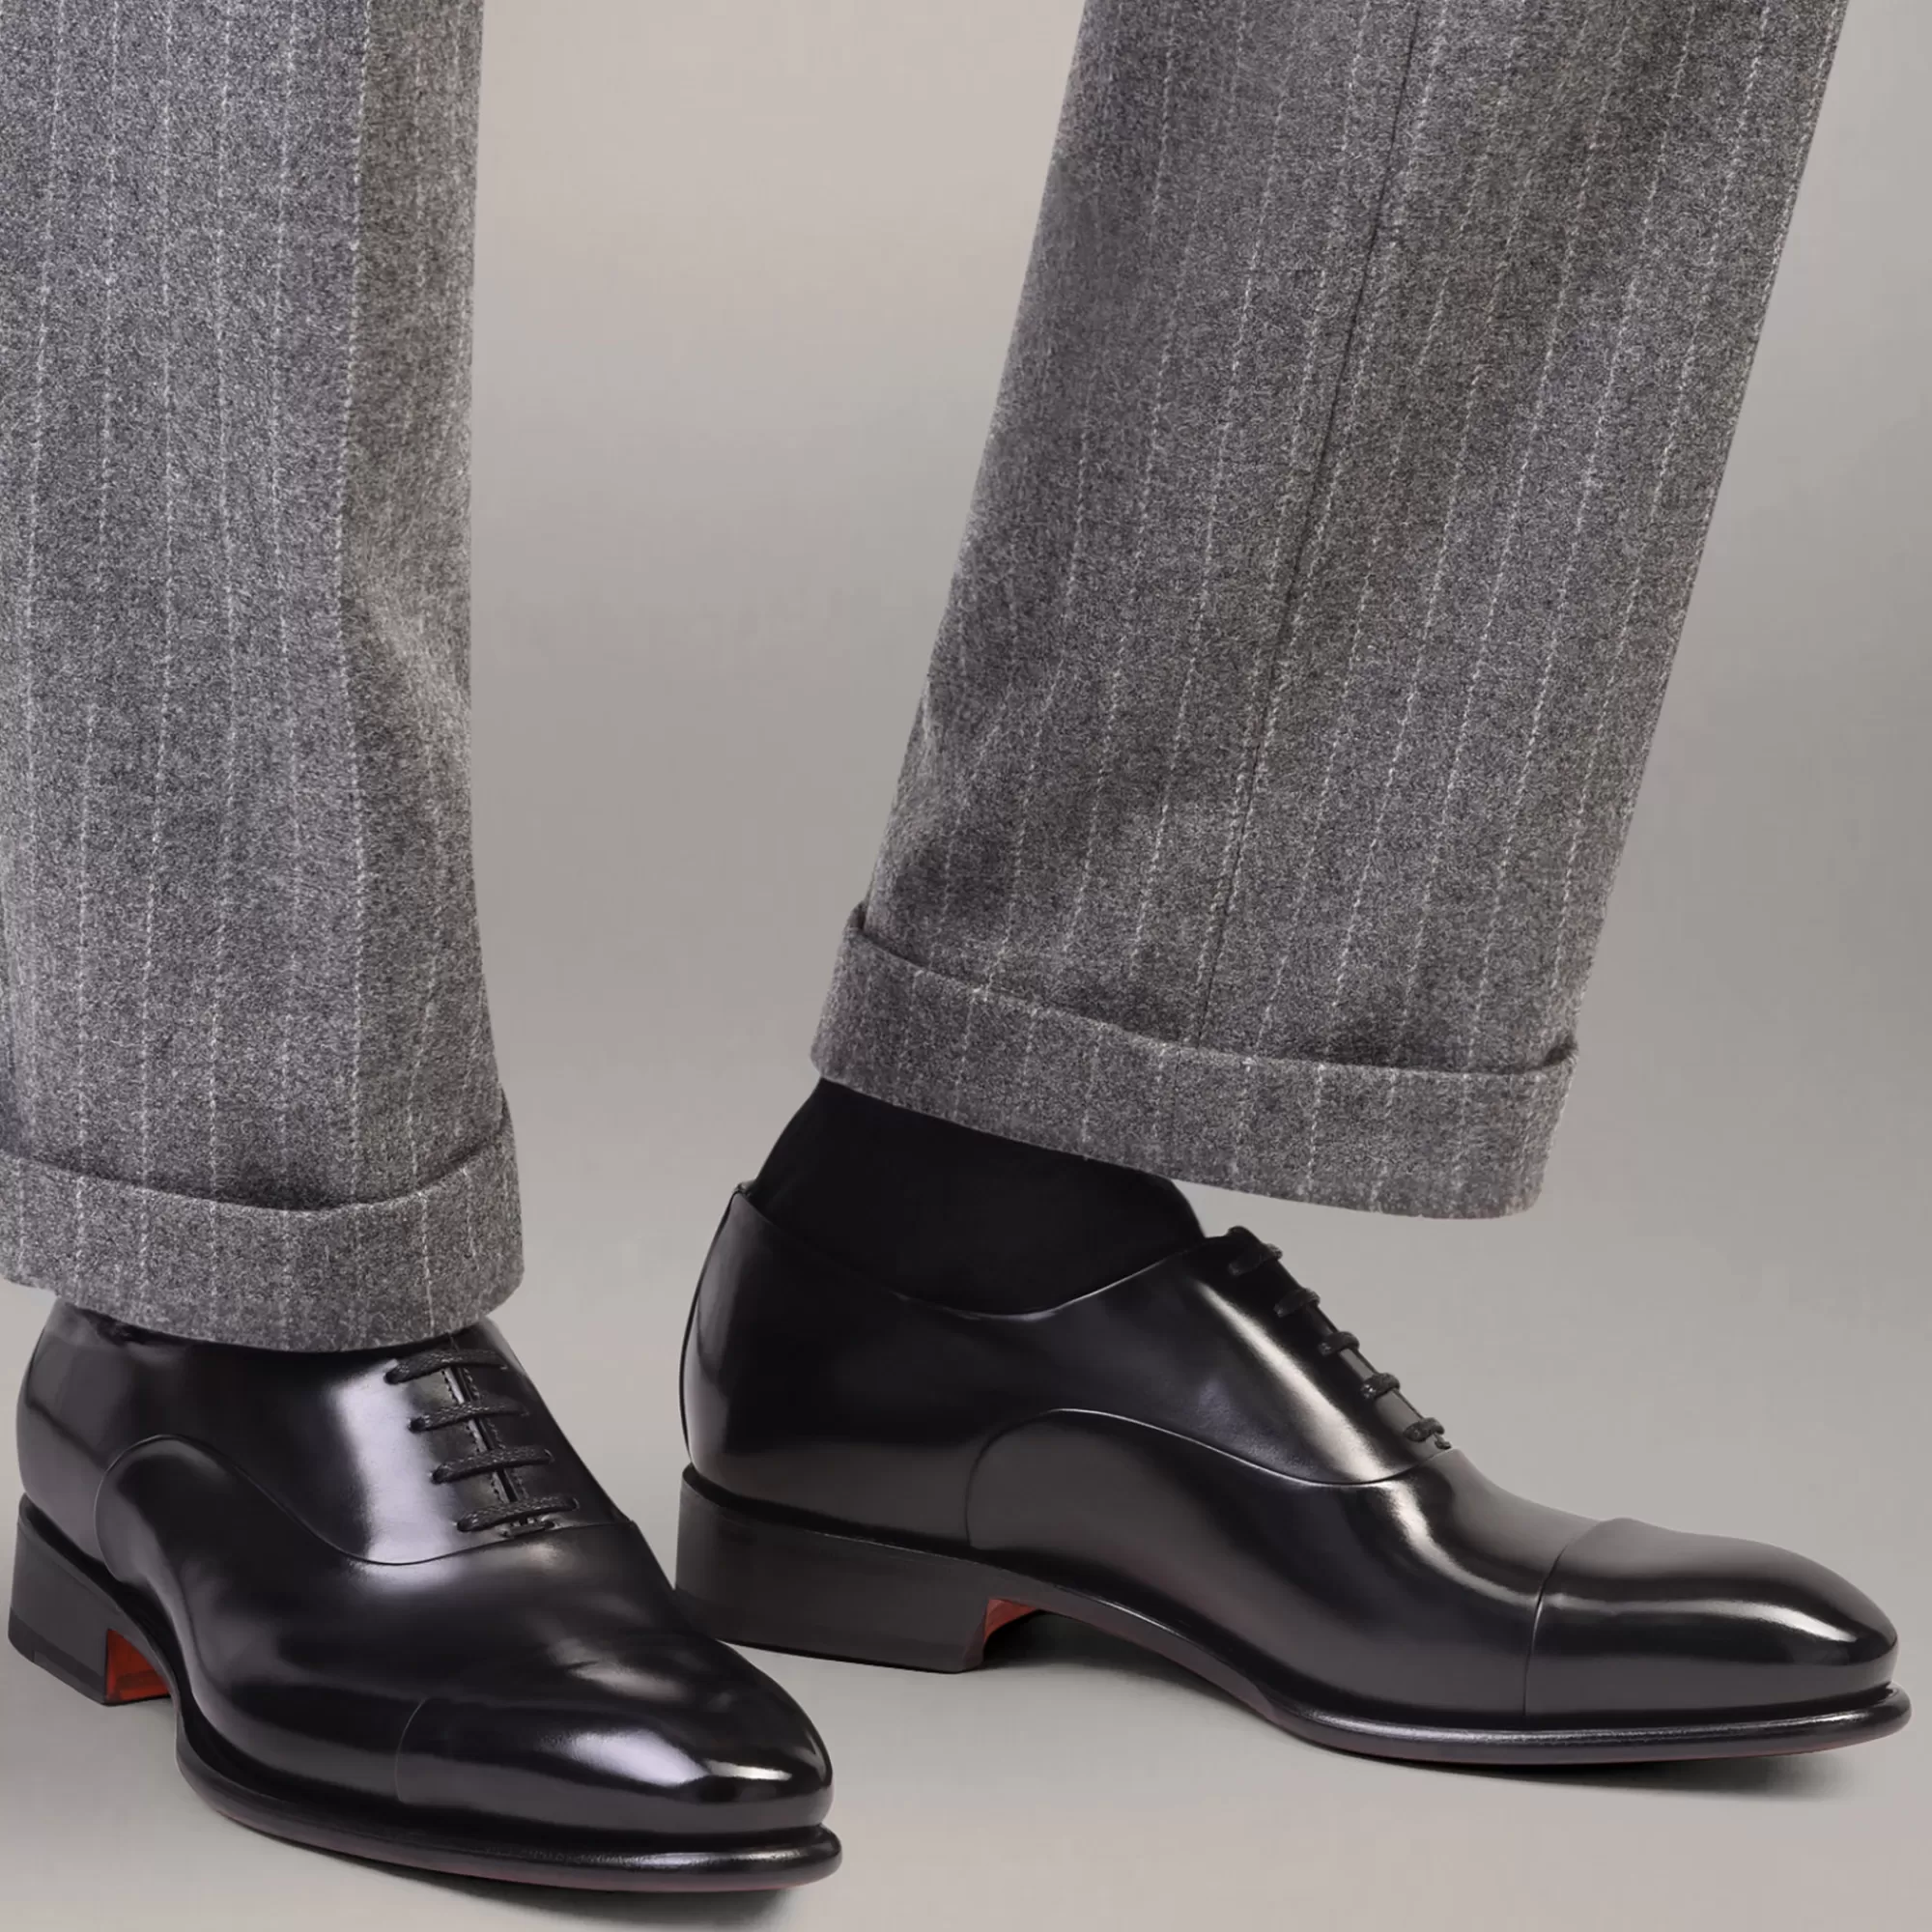 Cheap Stringata oxford da uomo in pelle anticata nera | SUGGERIMENTI Vedi tutte le calzature | Stringate